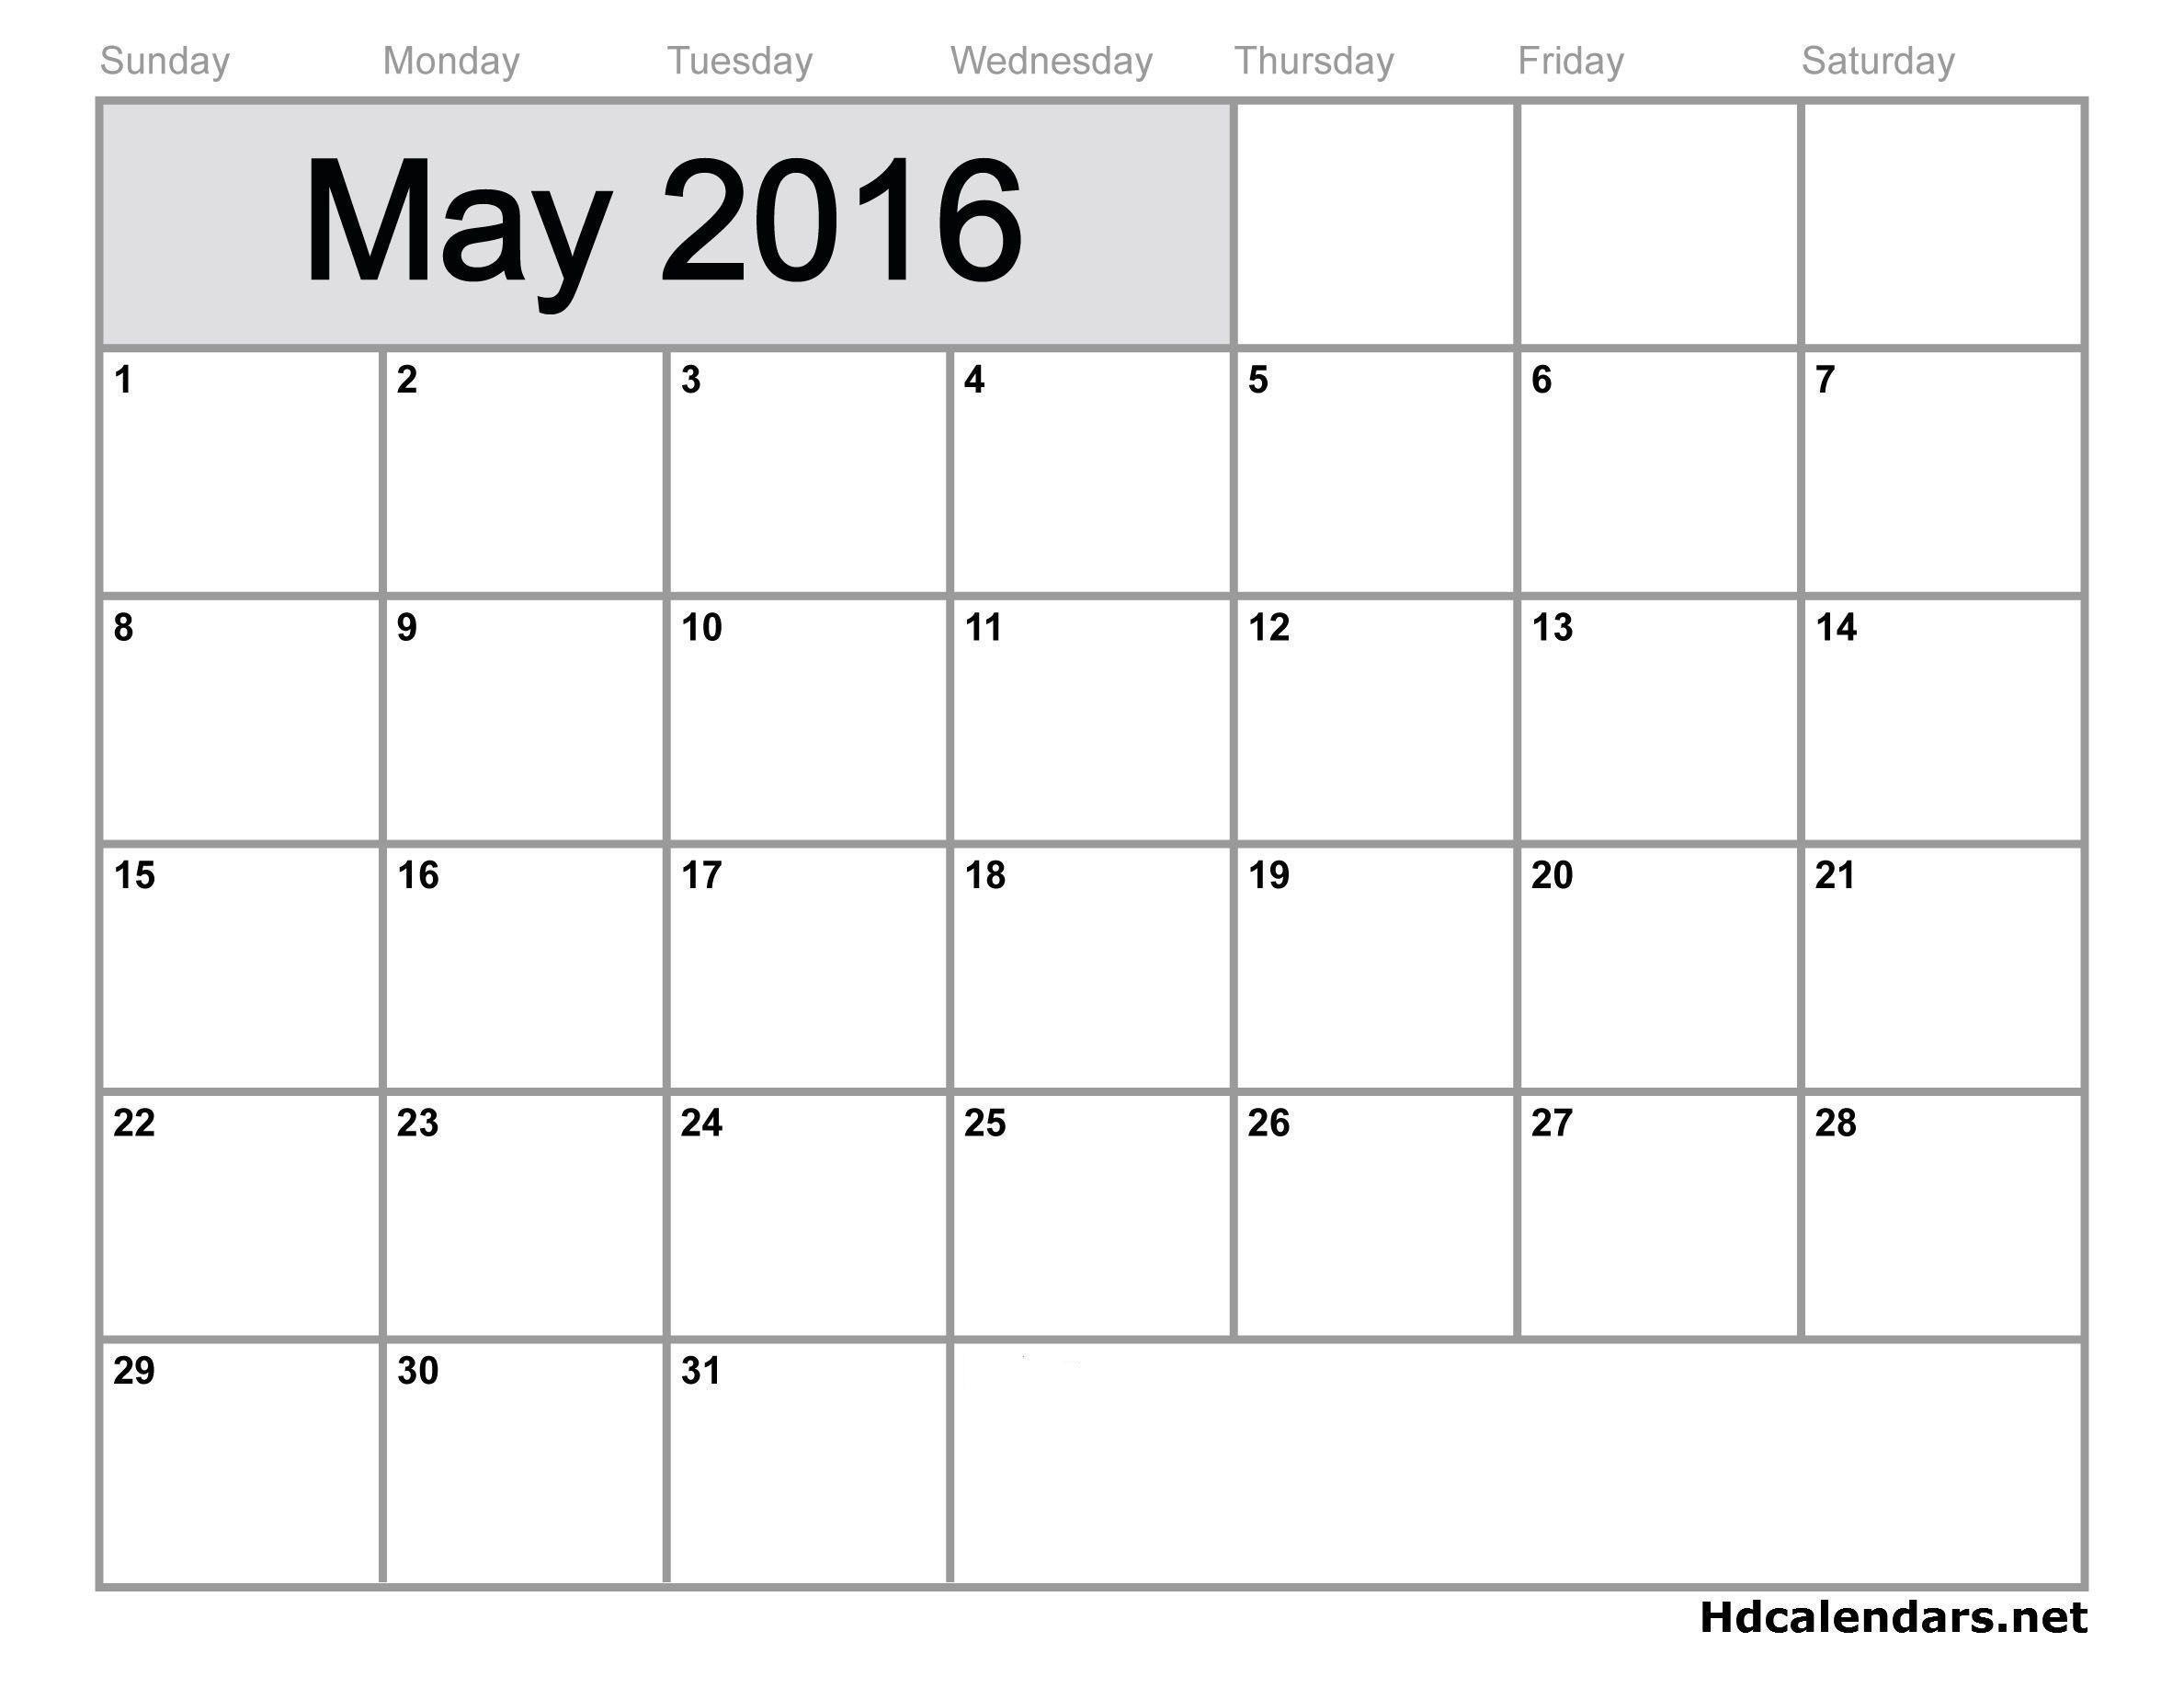 May 2016 Calendar Wallpaper